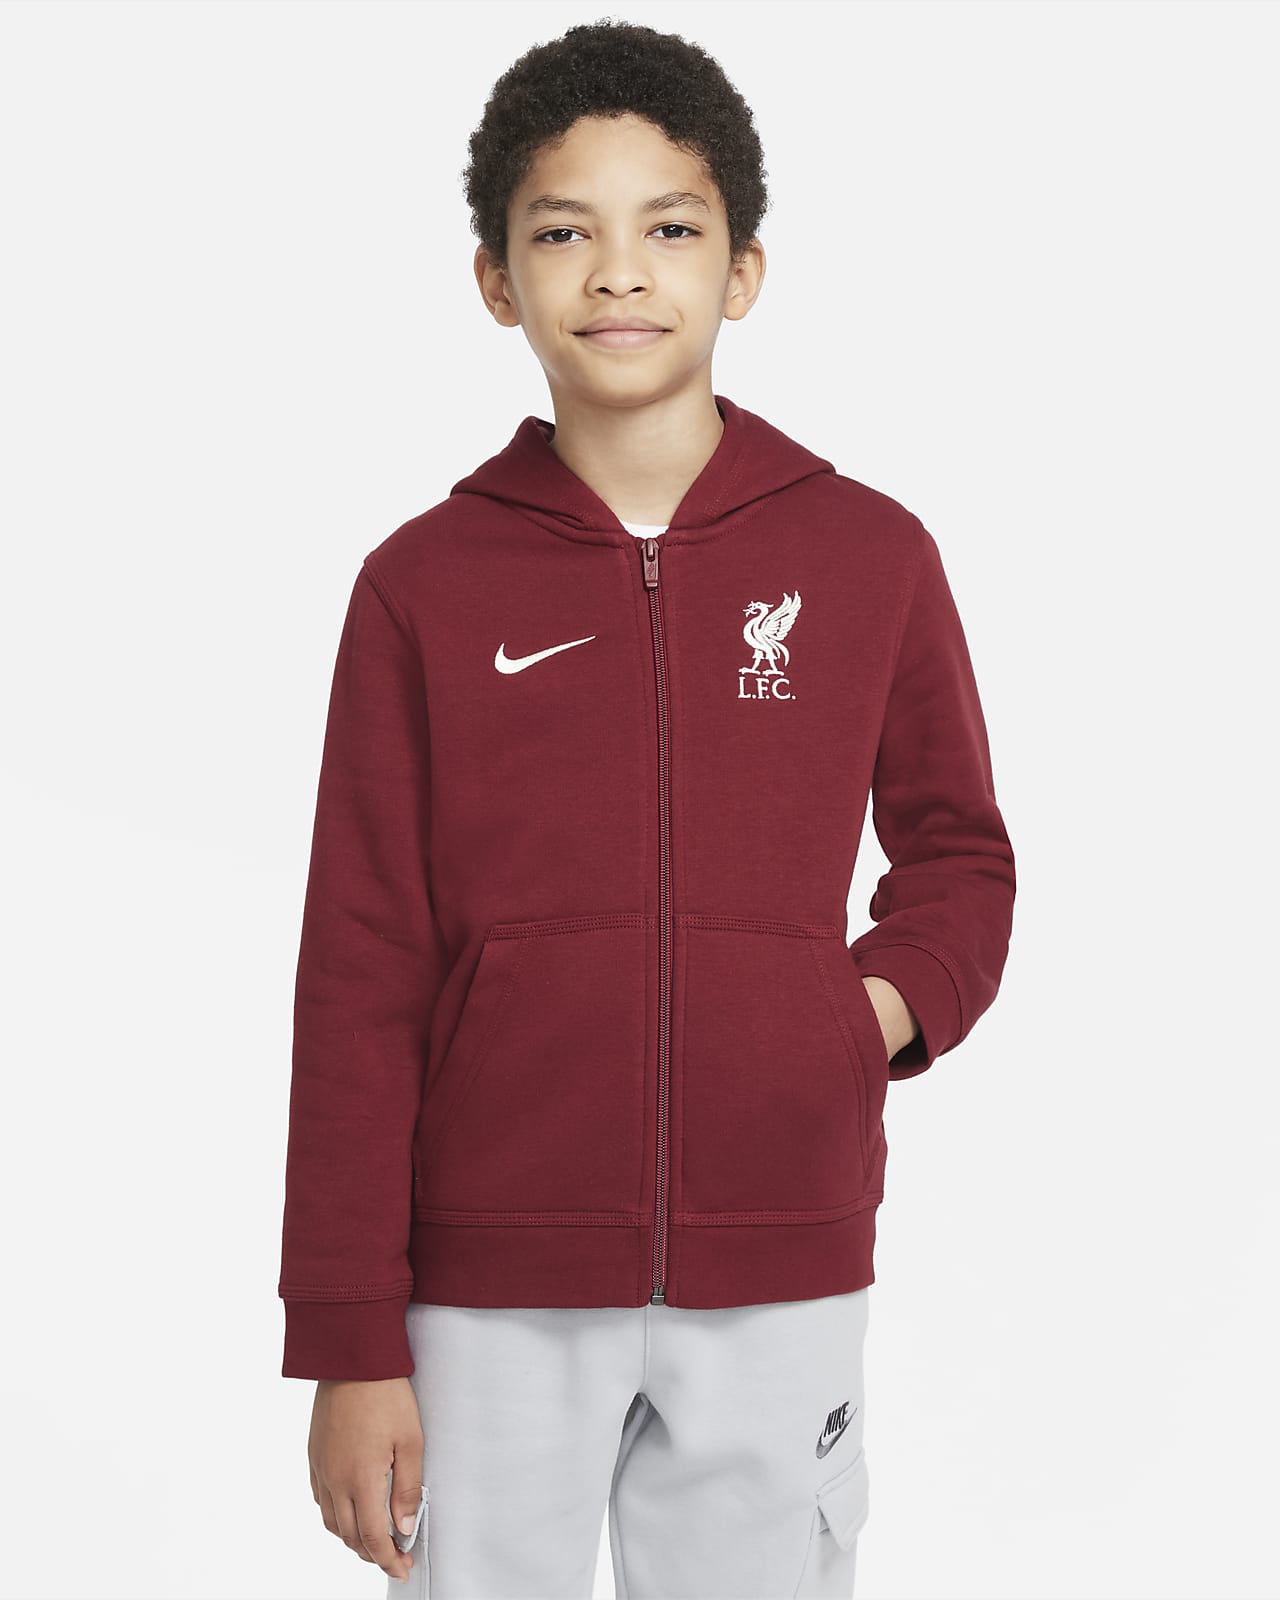 Liverpool FC Boys Hoody Zip Fleece Kids Official Football Gift